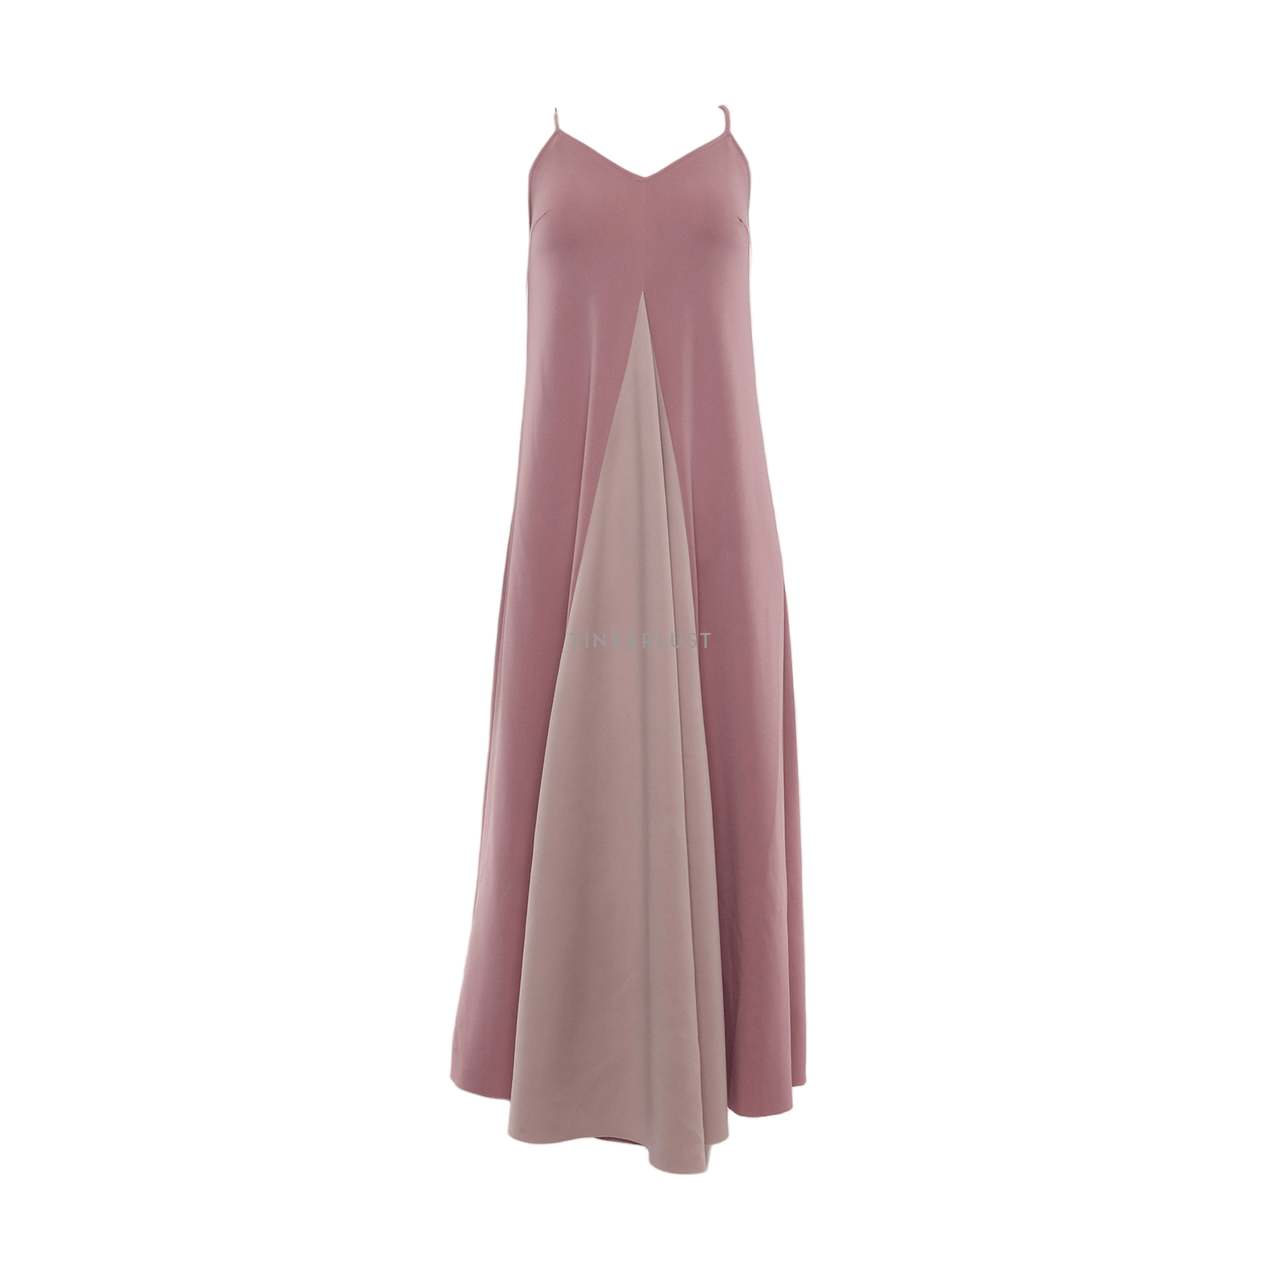 Sovi Atelier x Mme Huillet Pink & Cream Long Dress